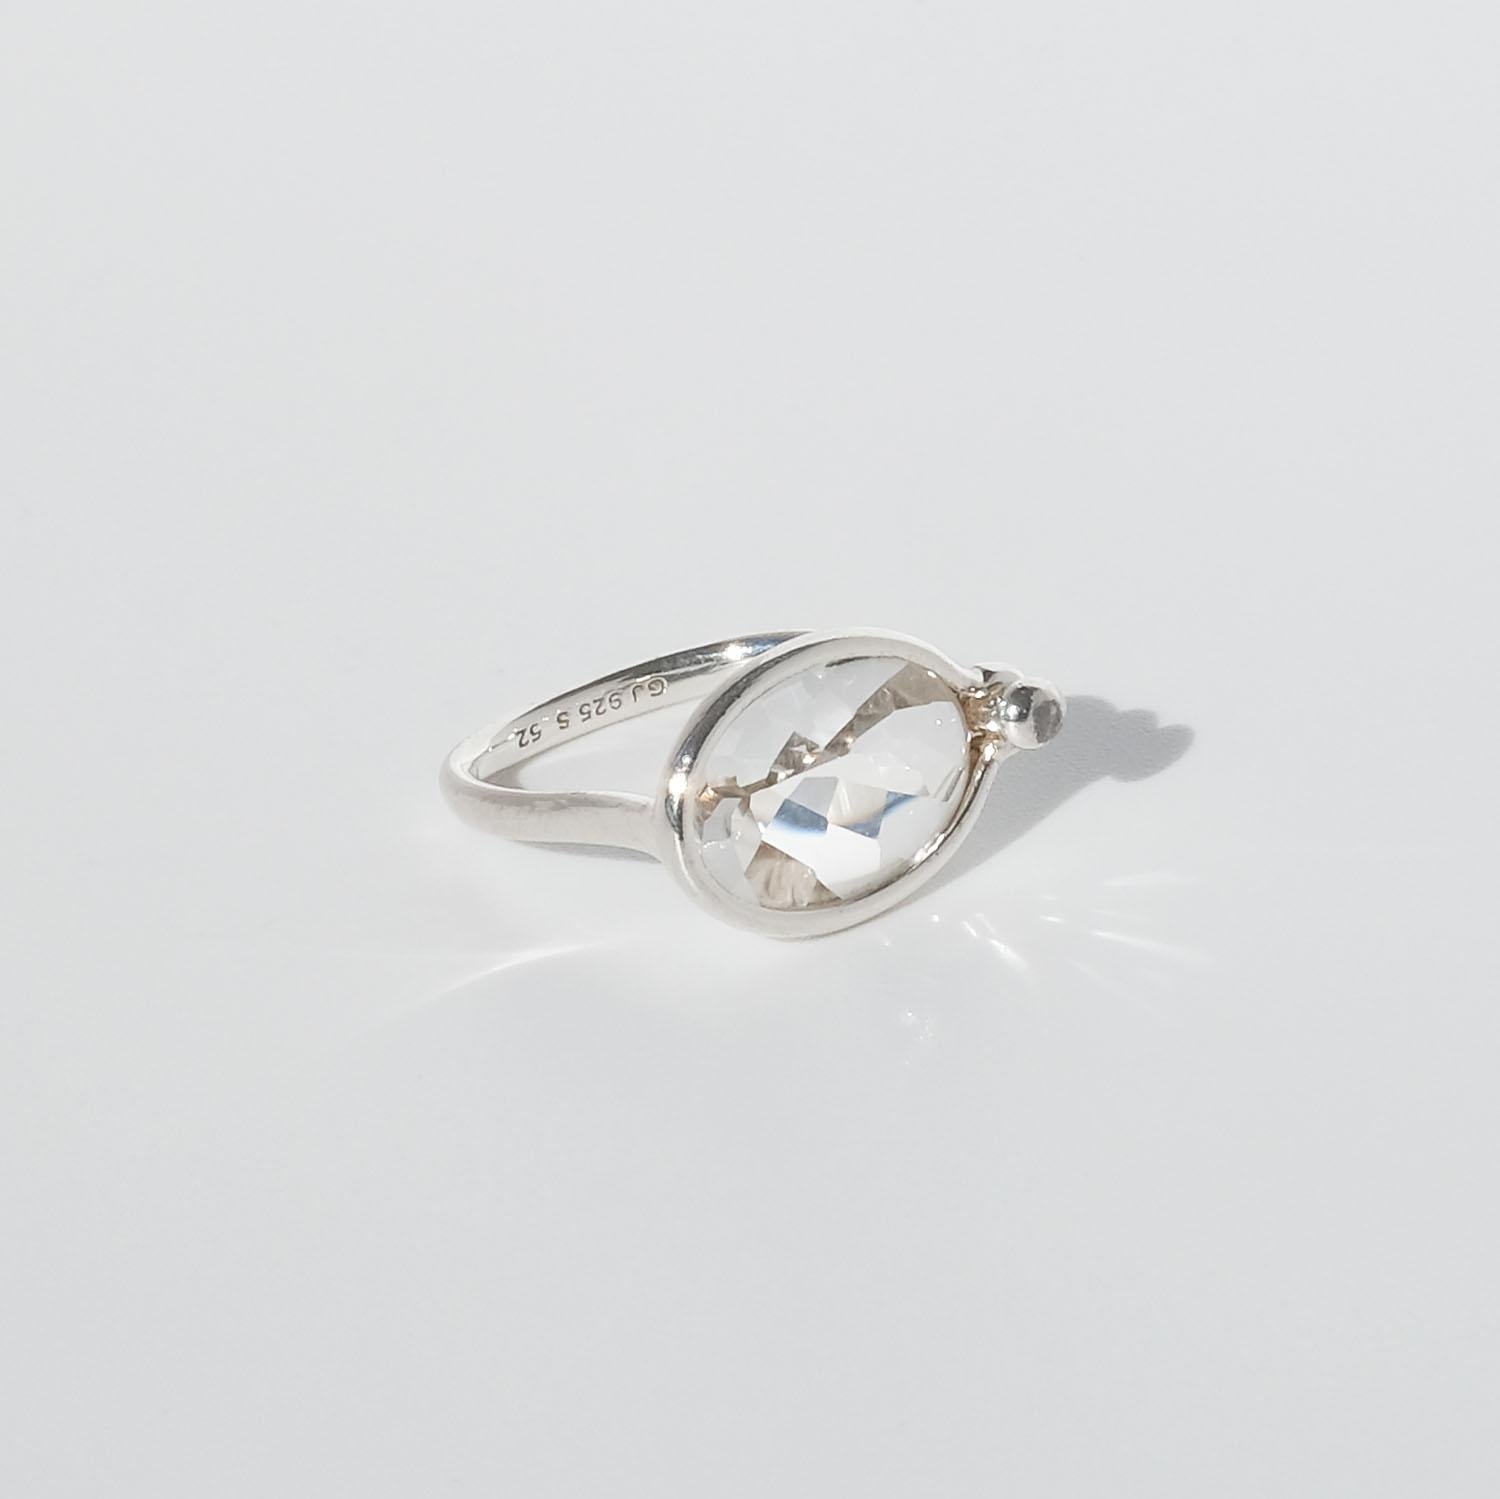 Silver and Rock Crystal Ring by Vivianna Torun Bülow-Hübe for Georg Jensen 2